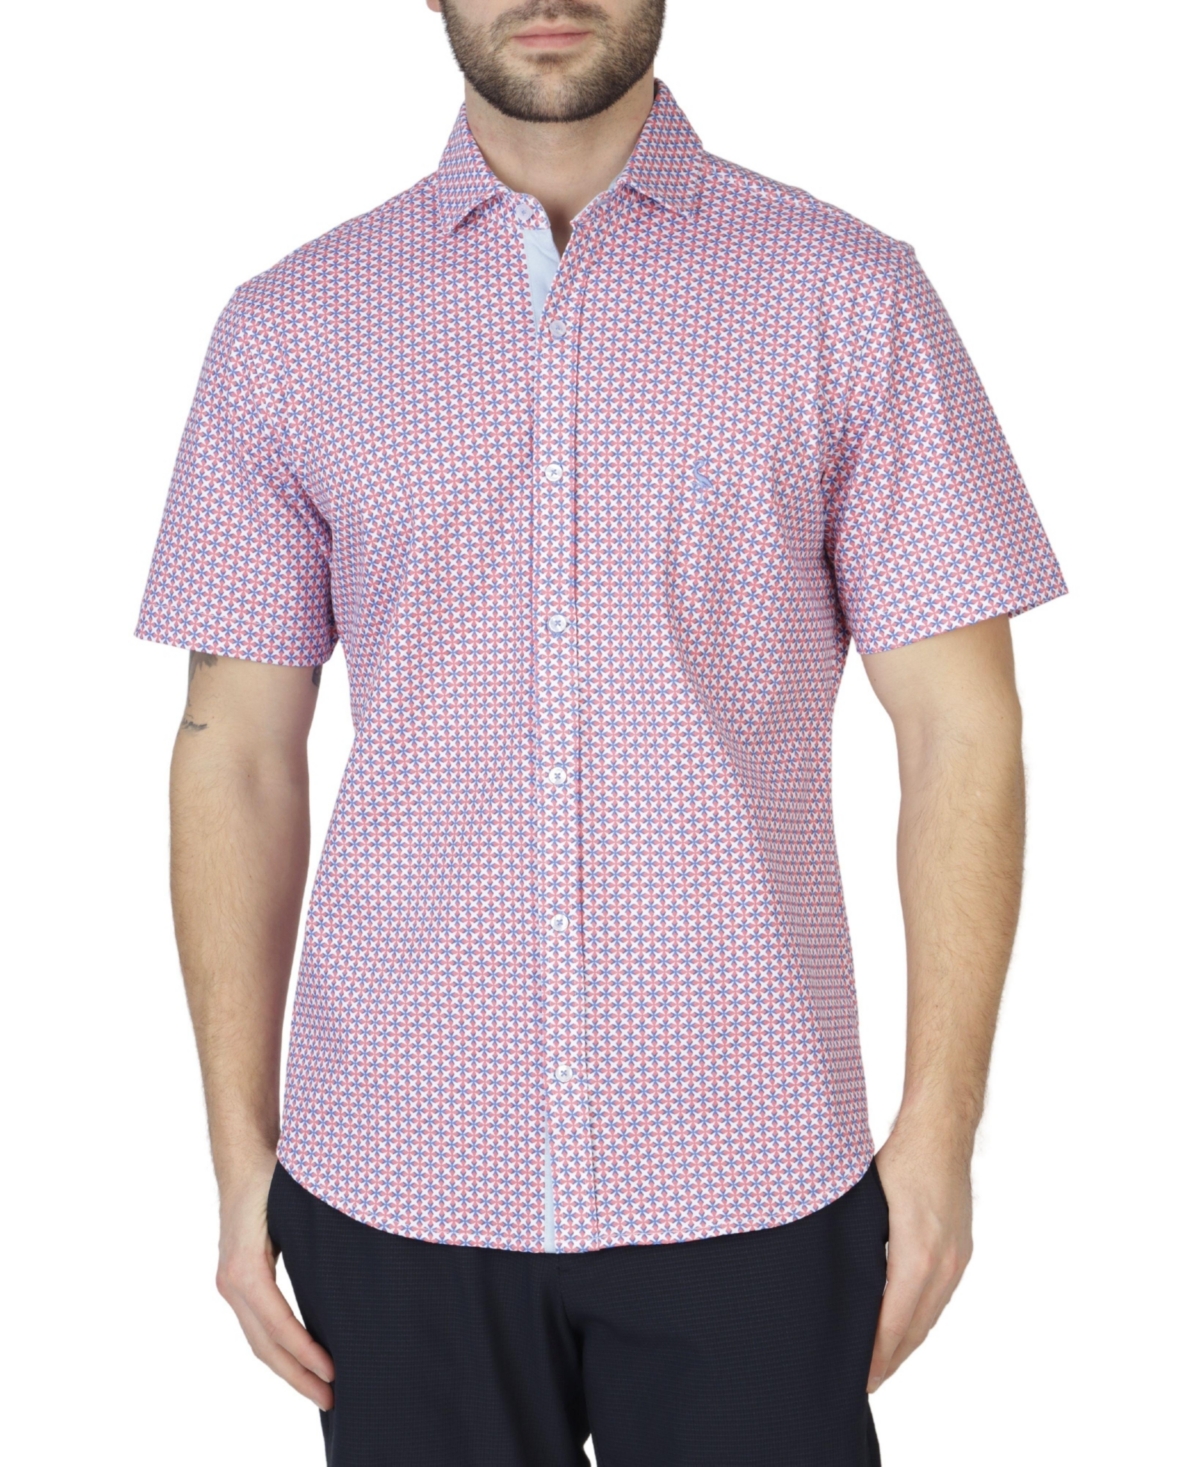 Retro Geo Knit Short Sleeve Shirt - Blush pink